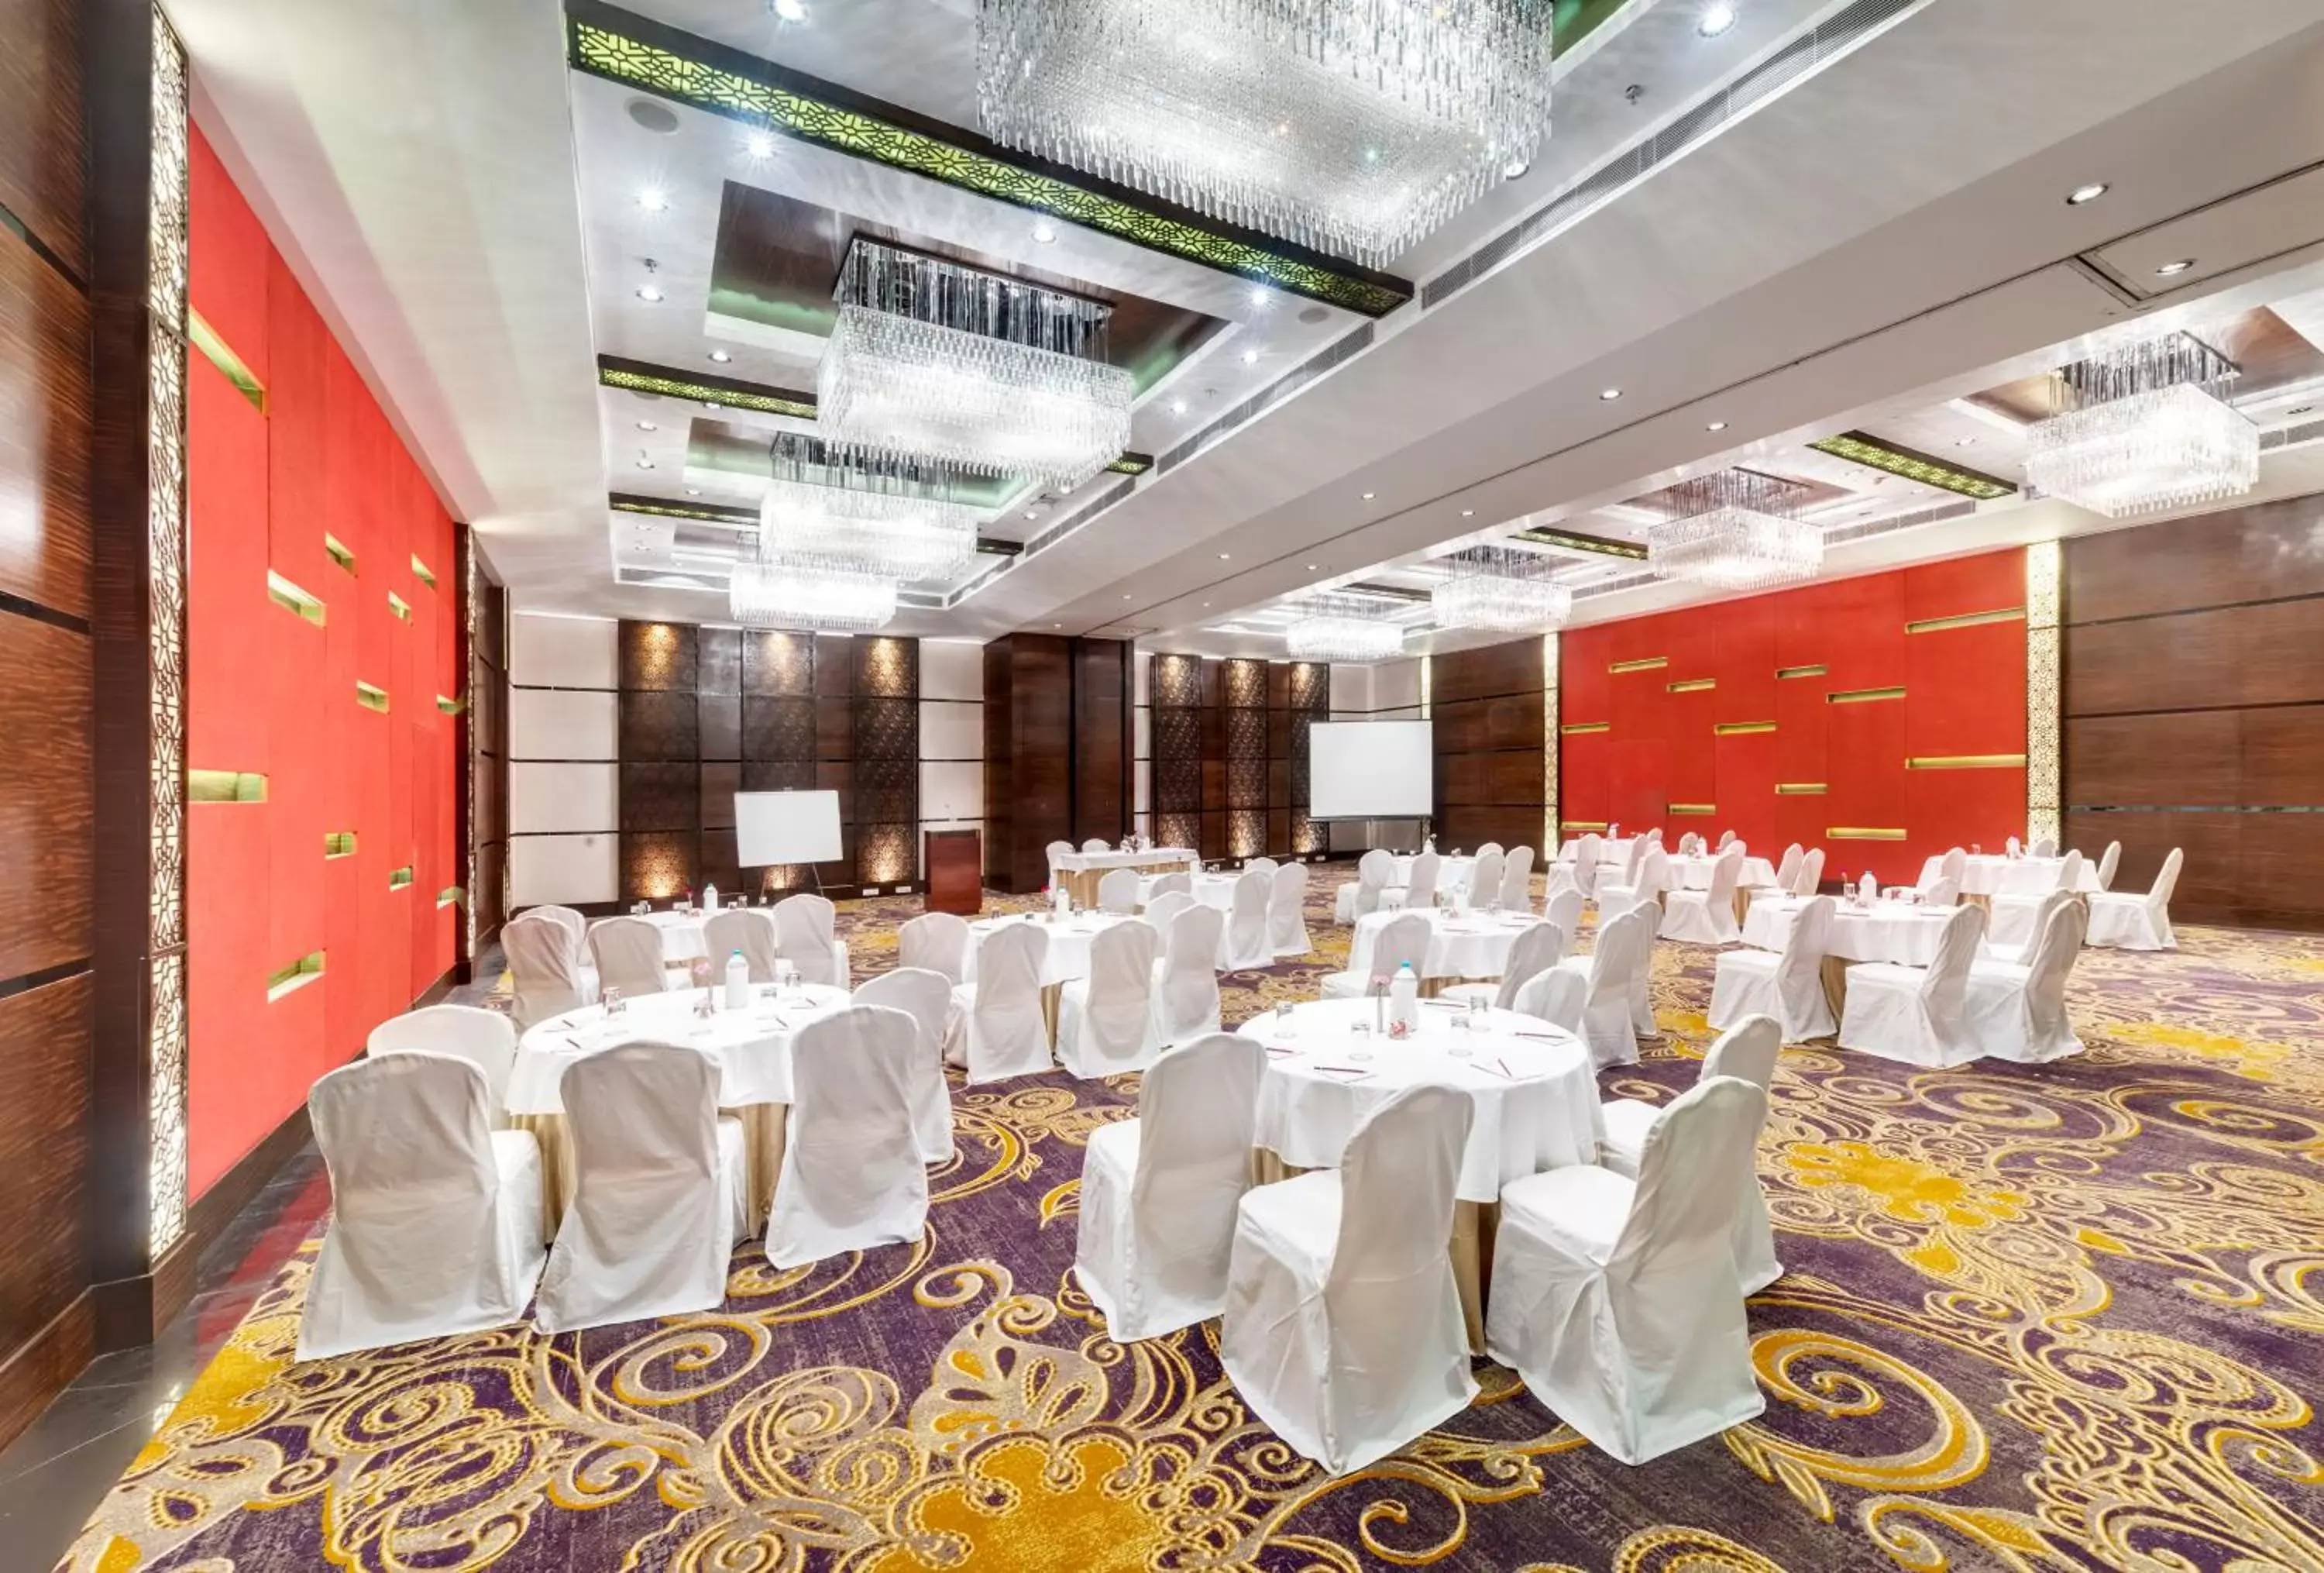 Banquet/Function facilities, Banquet Facilities in Pride Plaza Hotel, Kolkata